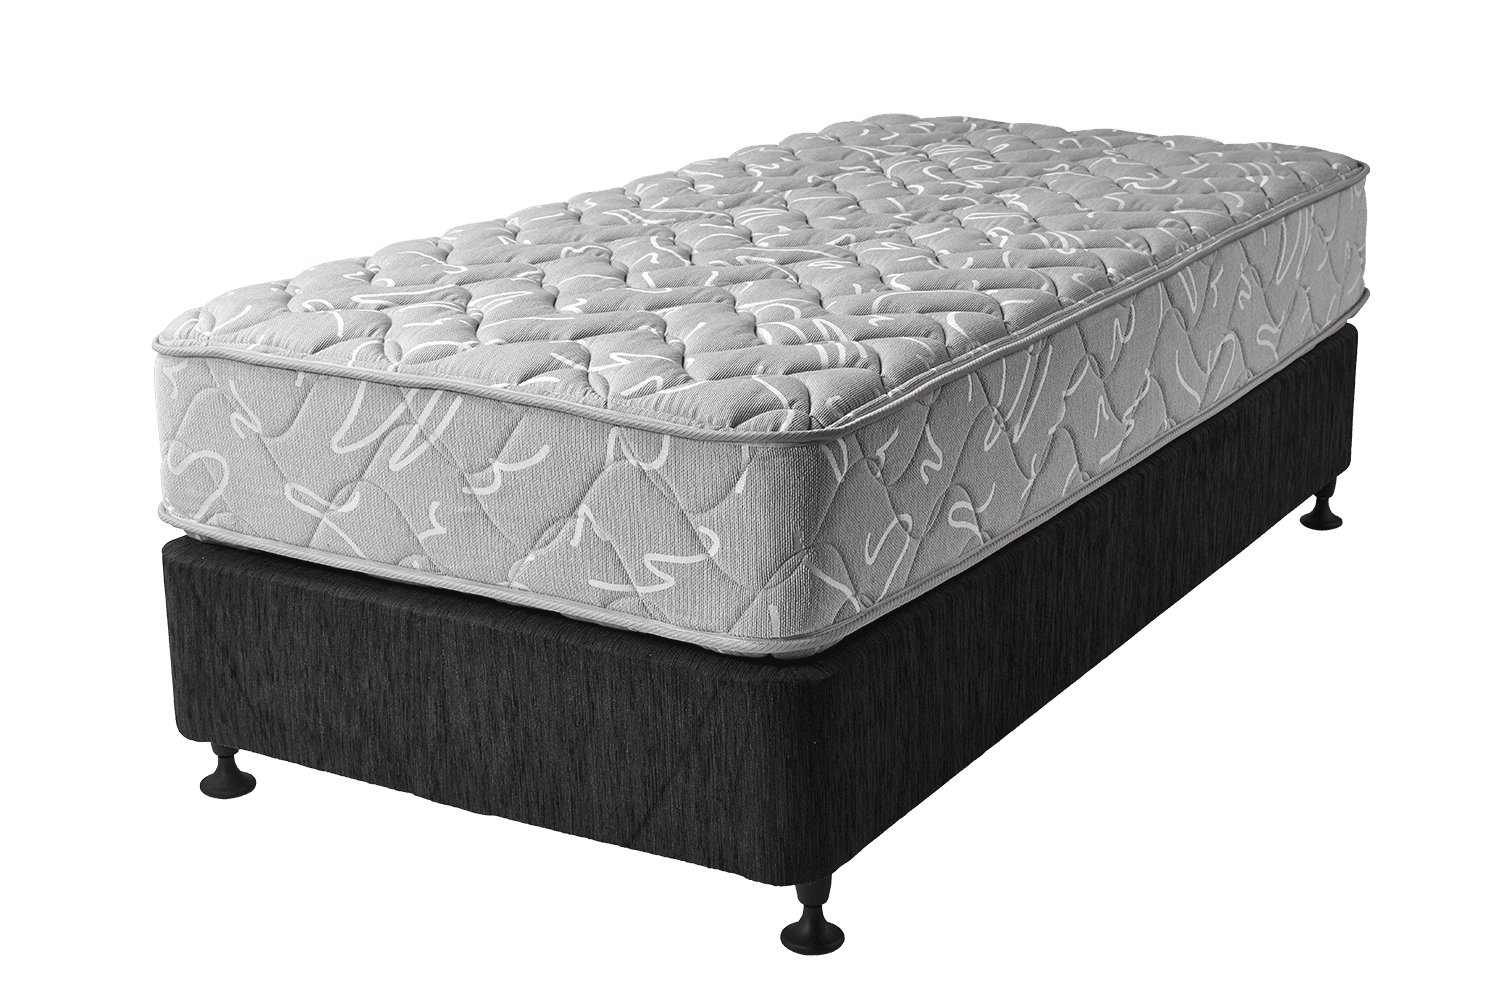 mattresses for sale sheffield